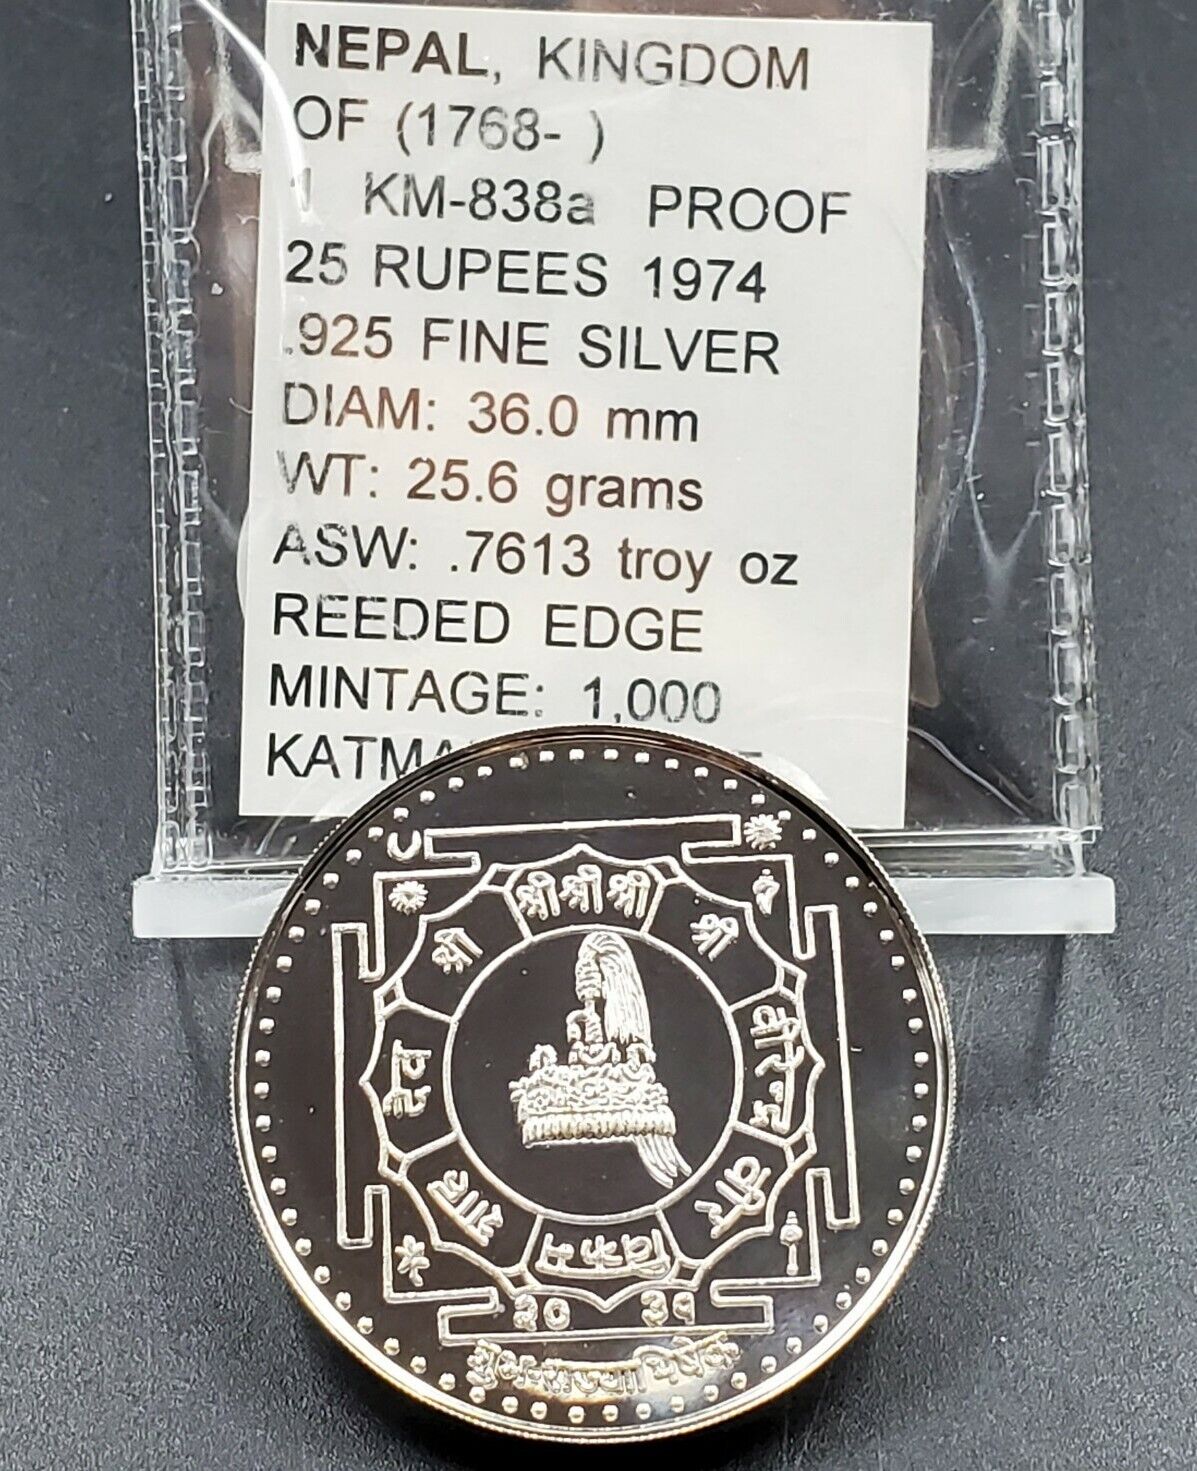 1974 Nepal SHAH DYNASTY 25 Rupee KM# 838a Birendra Bir Bikram Gem Proof Silver